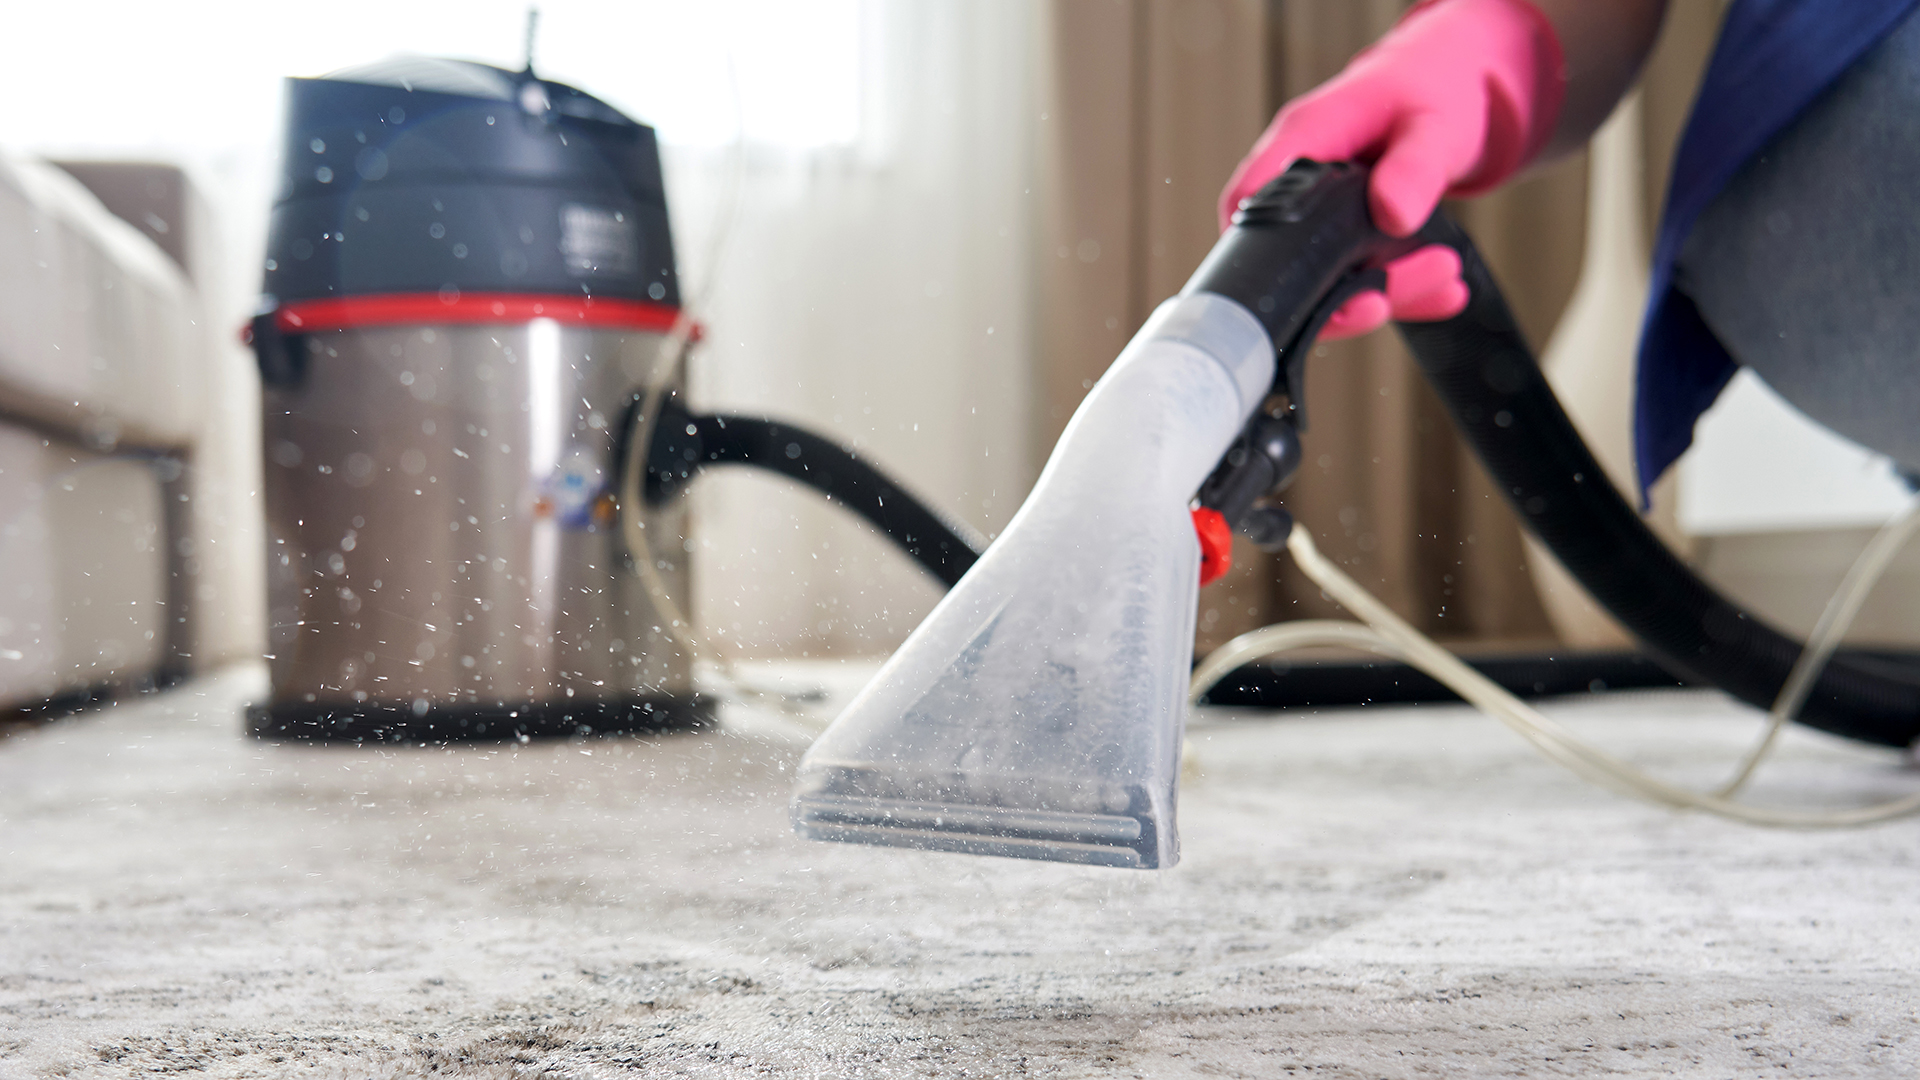 Hoover Carpet Basics Power Scrub Deluxe Carpet Cleaner 1 gal Water